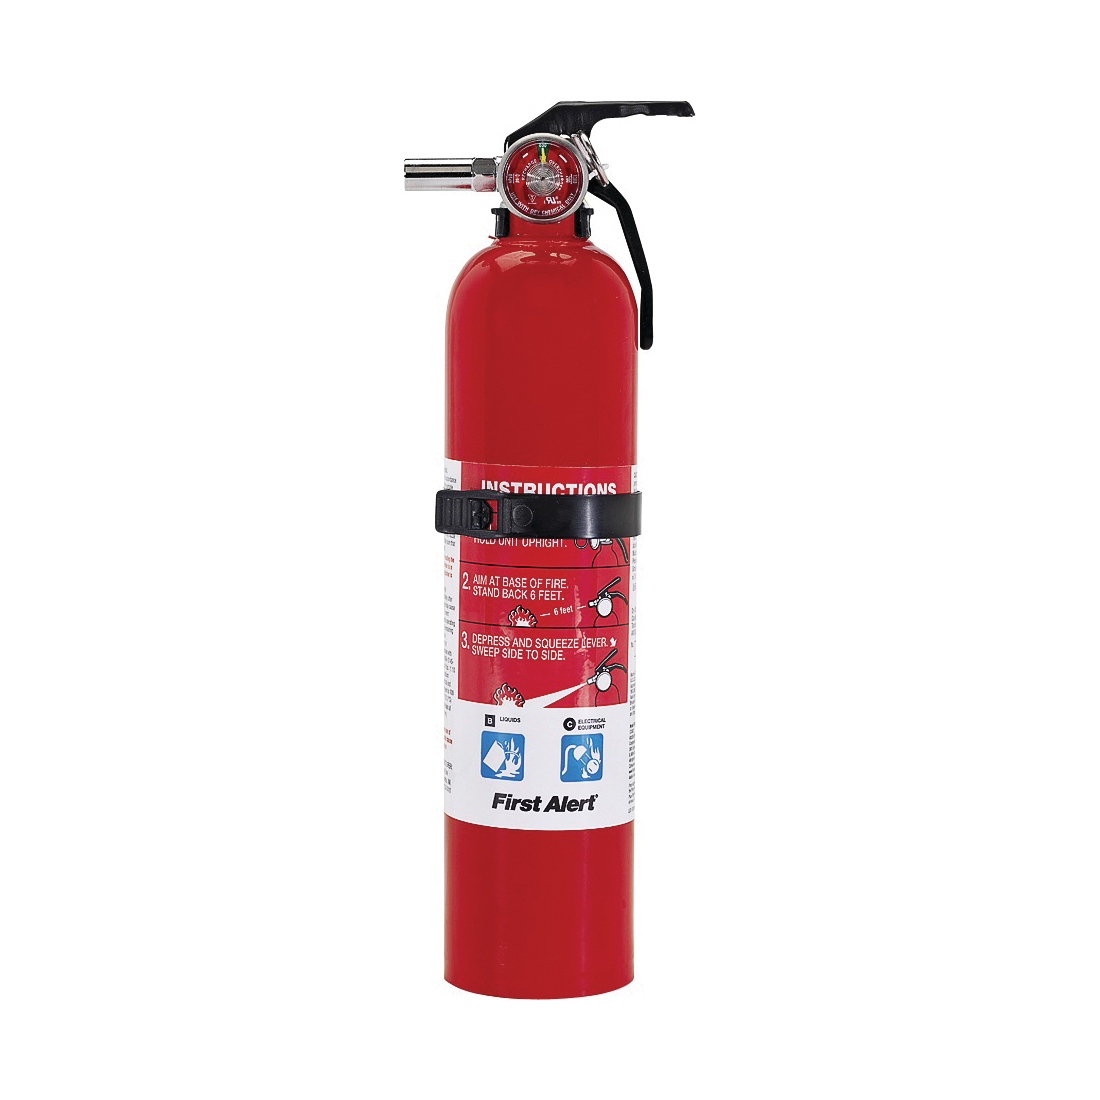 GARAGE1 Rechargeable Fire Extinguisher, 2.5 lb Capacity, Sodium Bicarbonate, 10-B:C Class